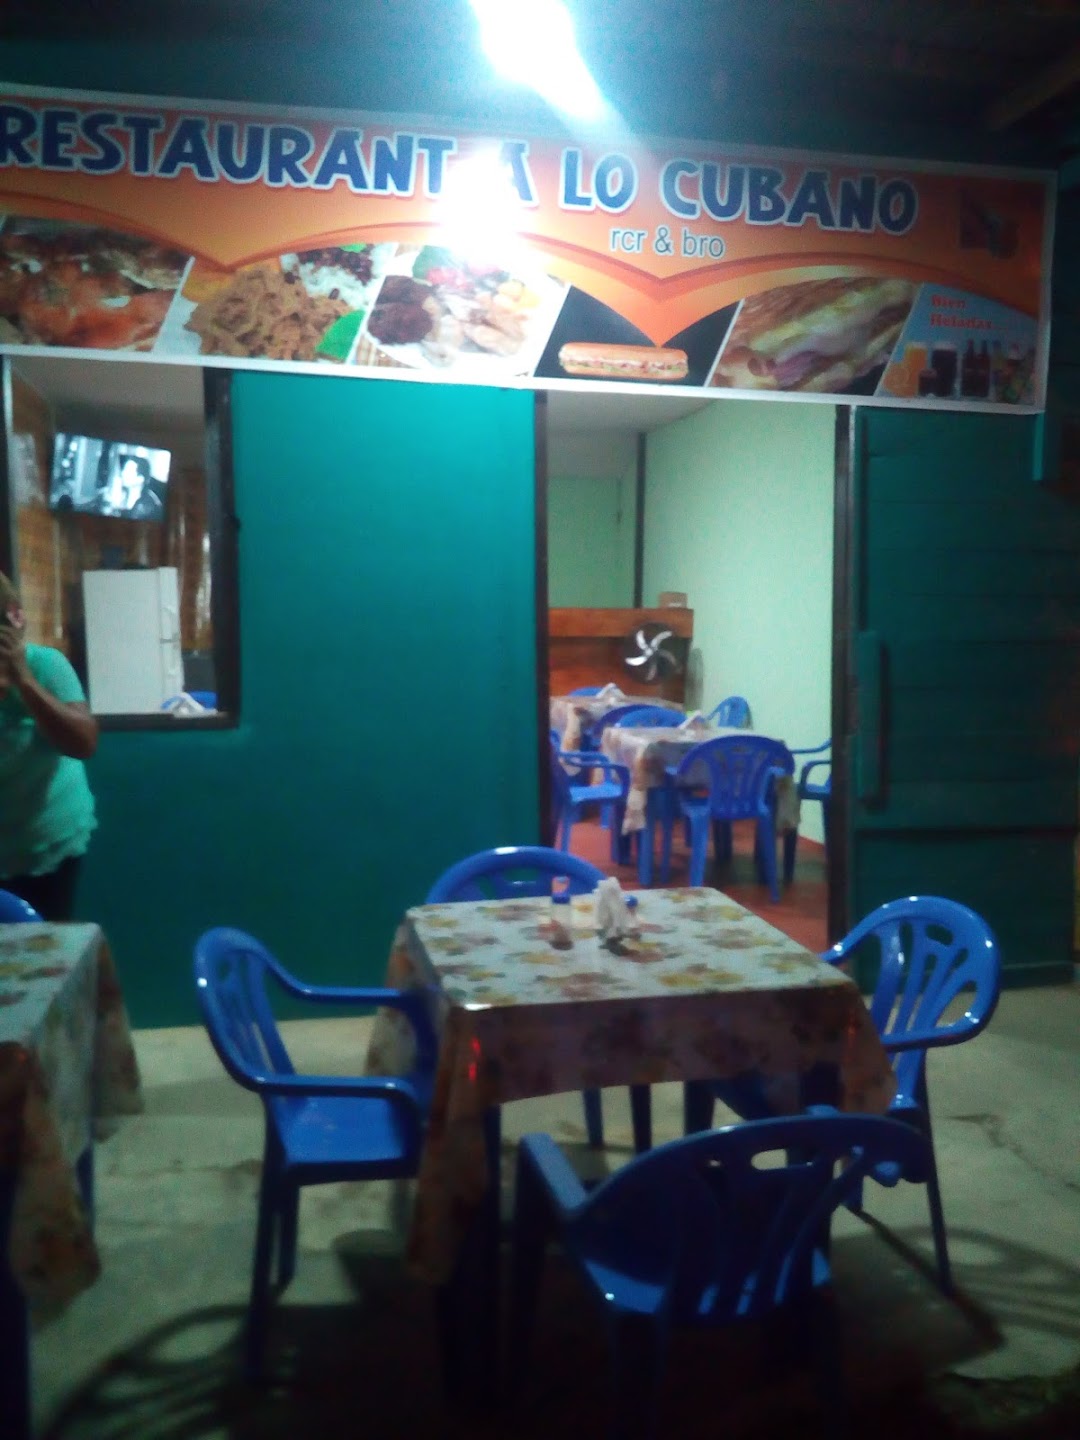 Restaurant A Lo Cubano. rcr & bro.